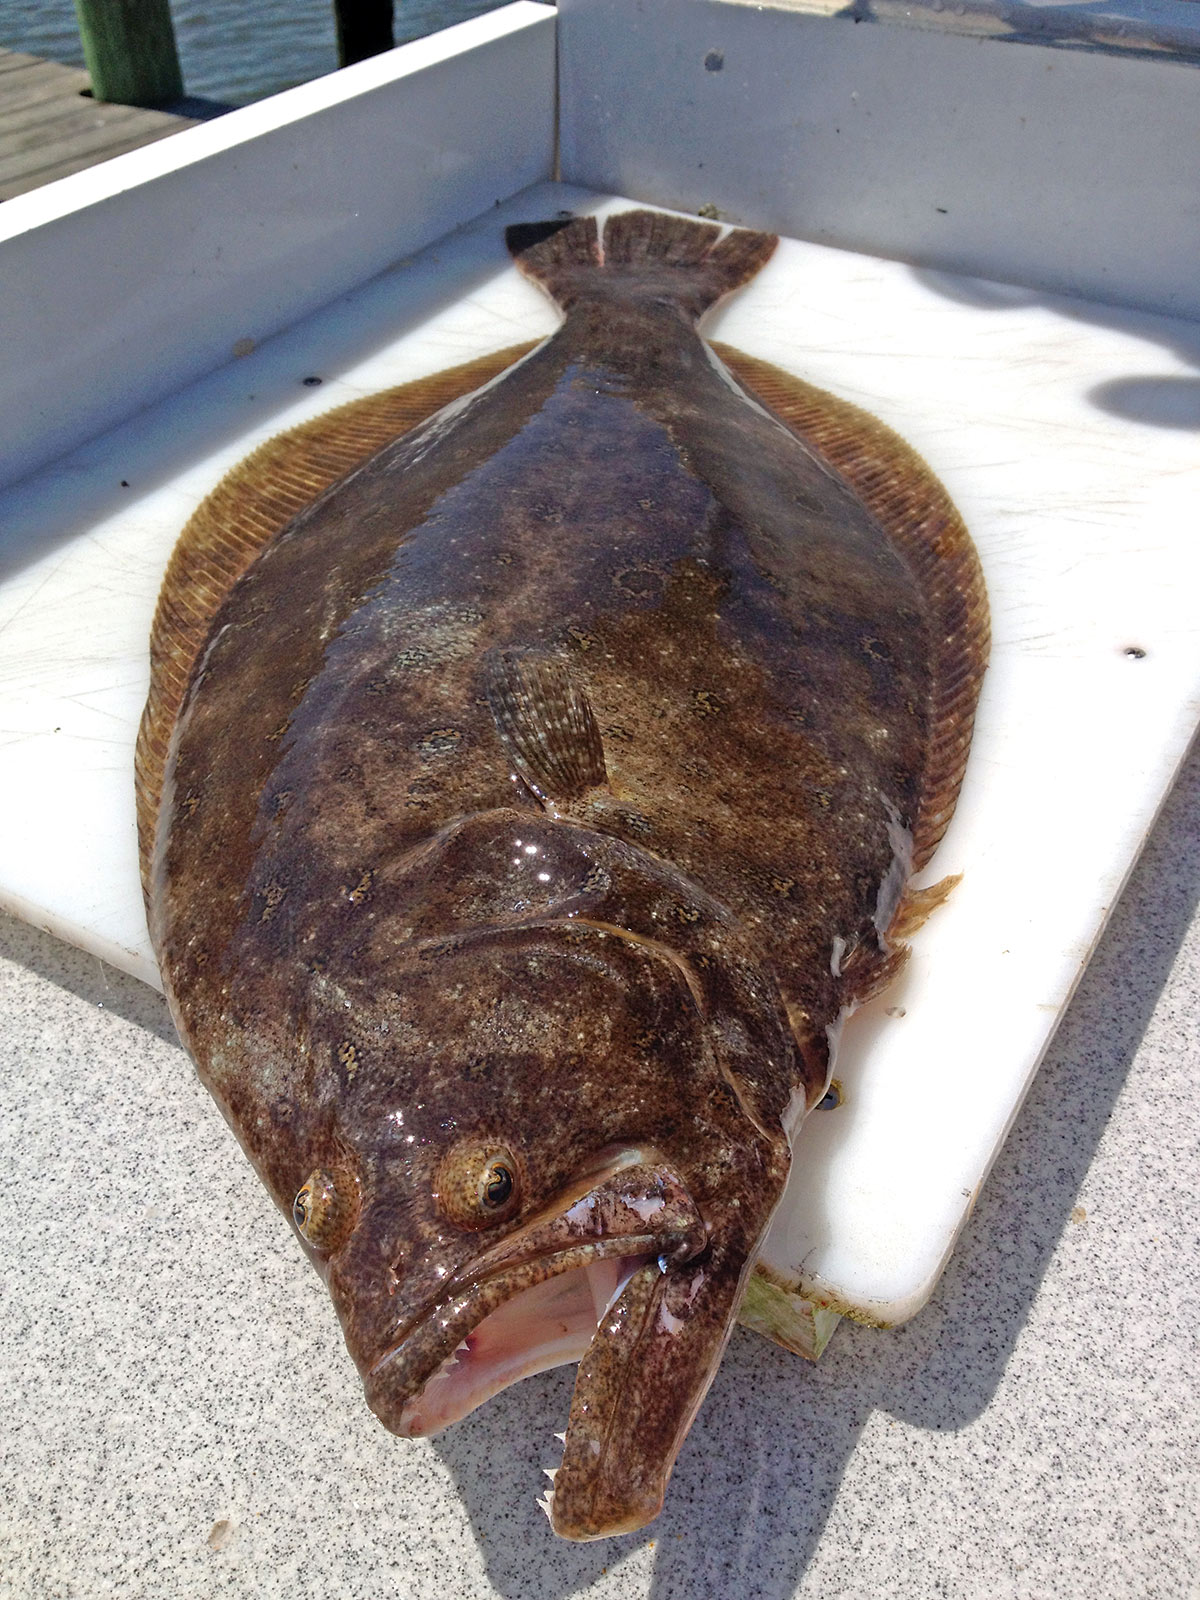 A big fluke fish laid on a board